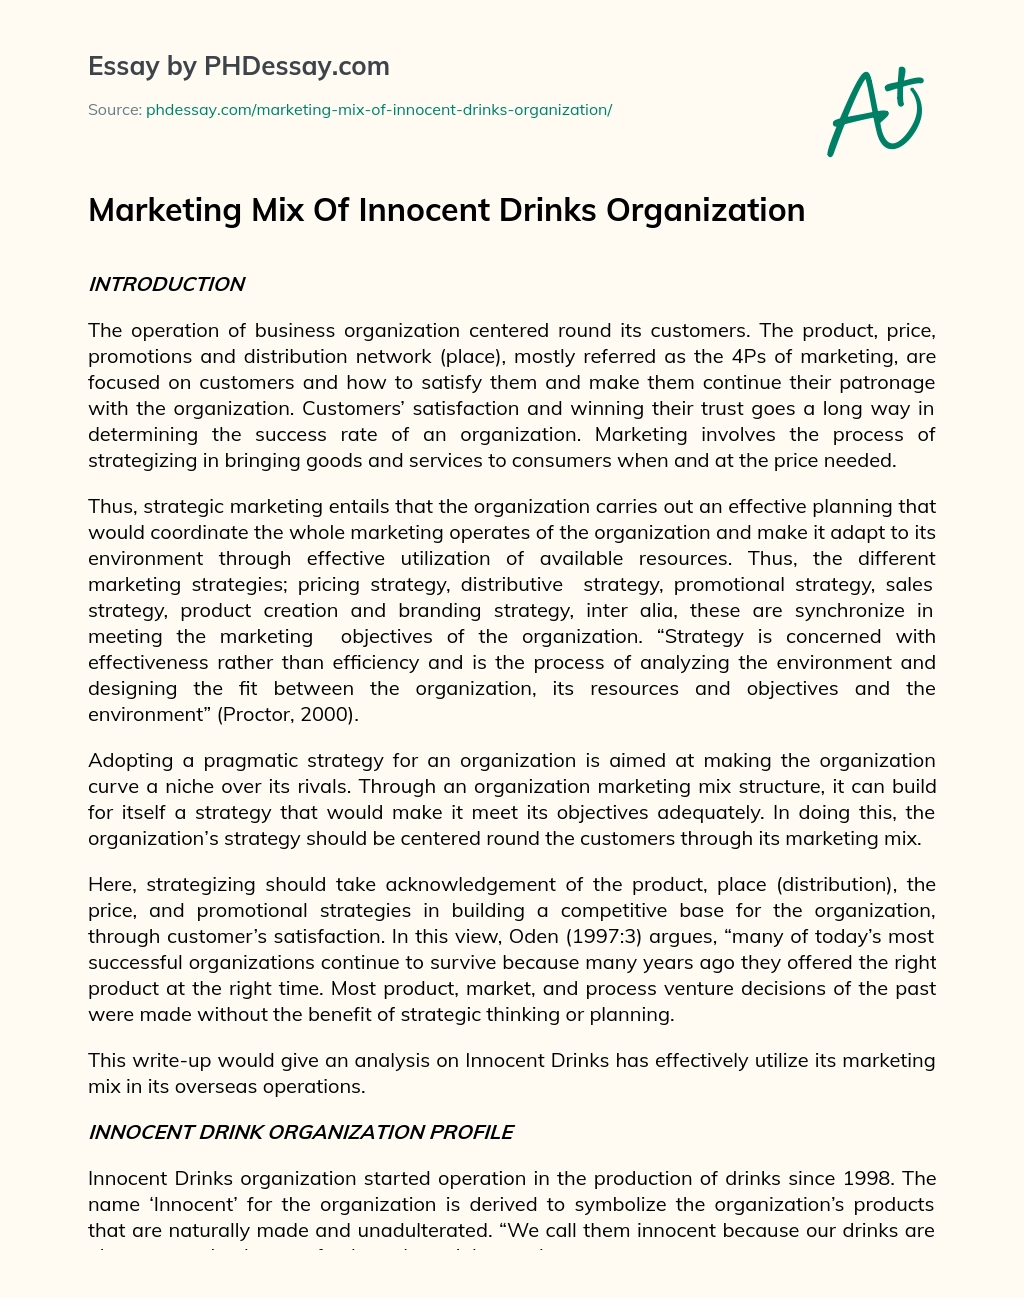 Marketing Mix Of Innocent Drinks Organization essay